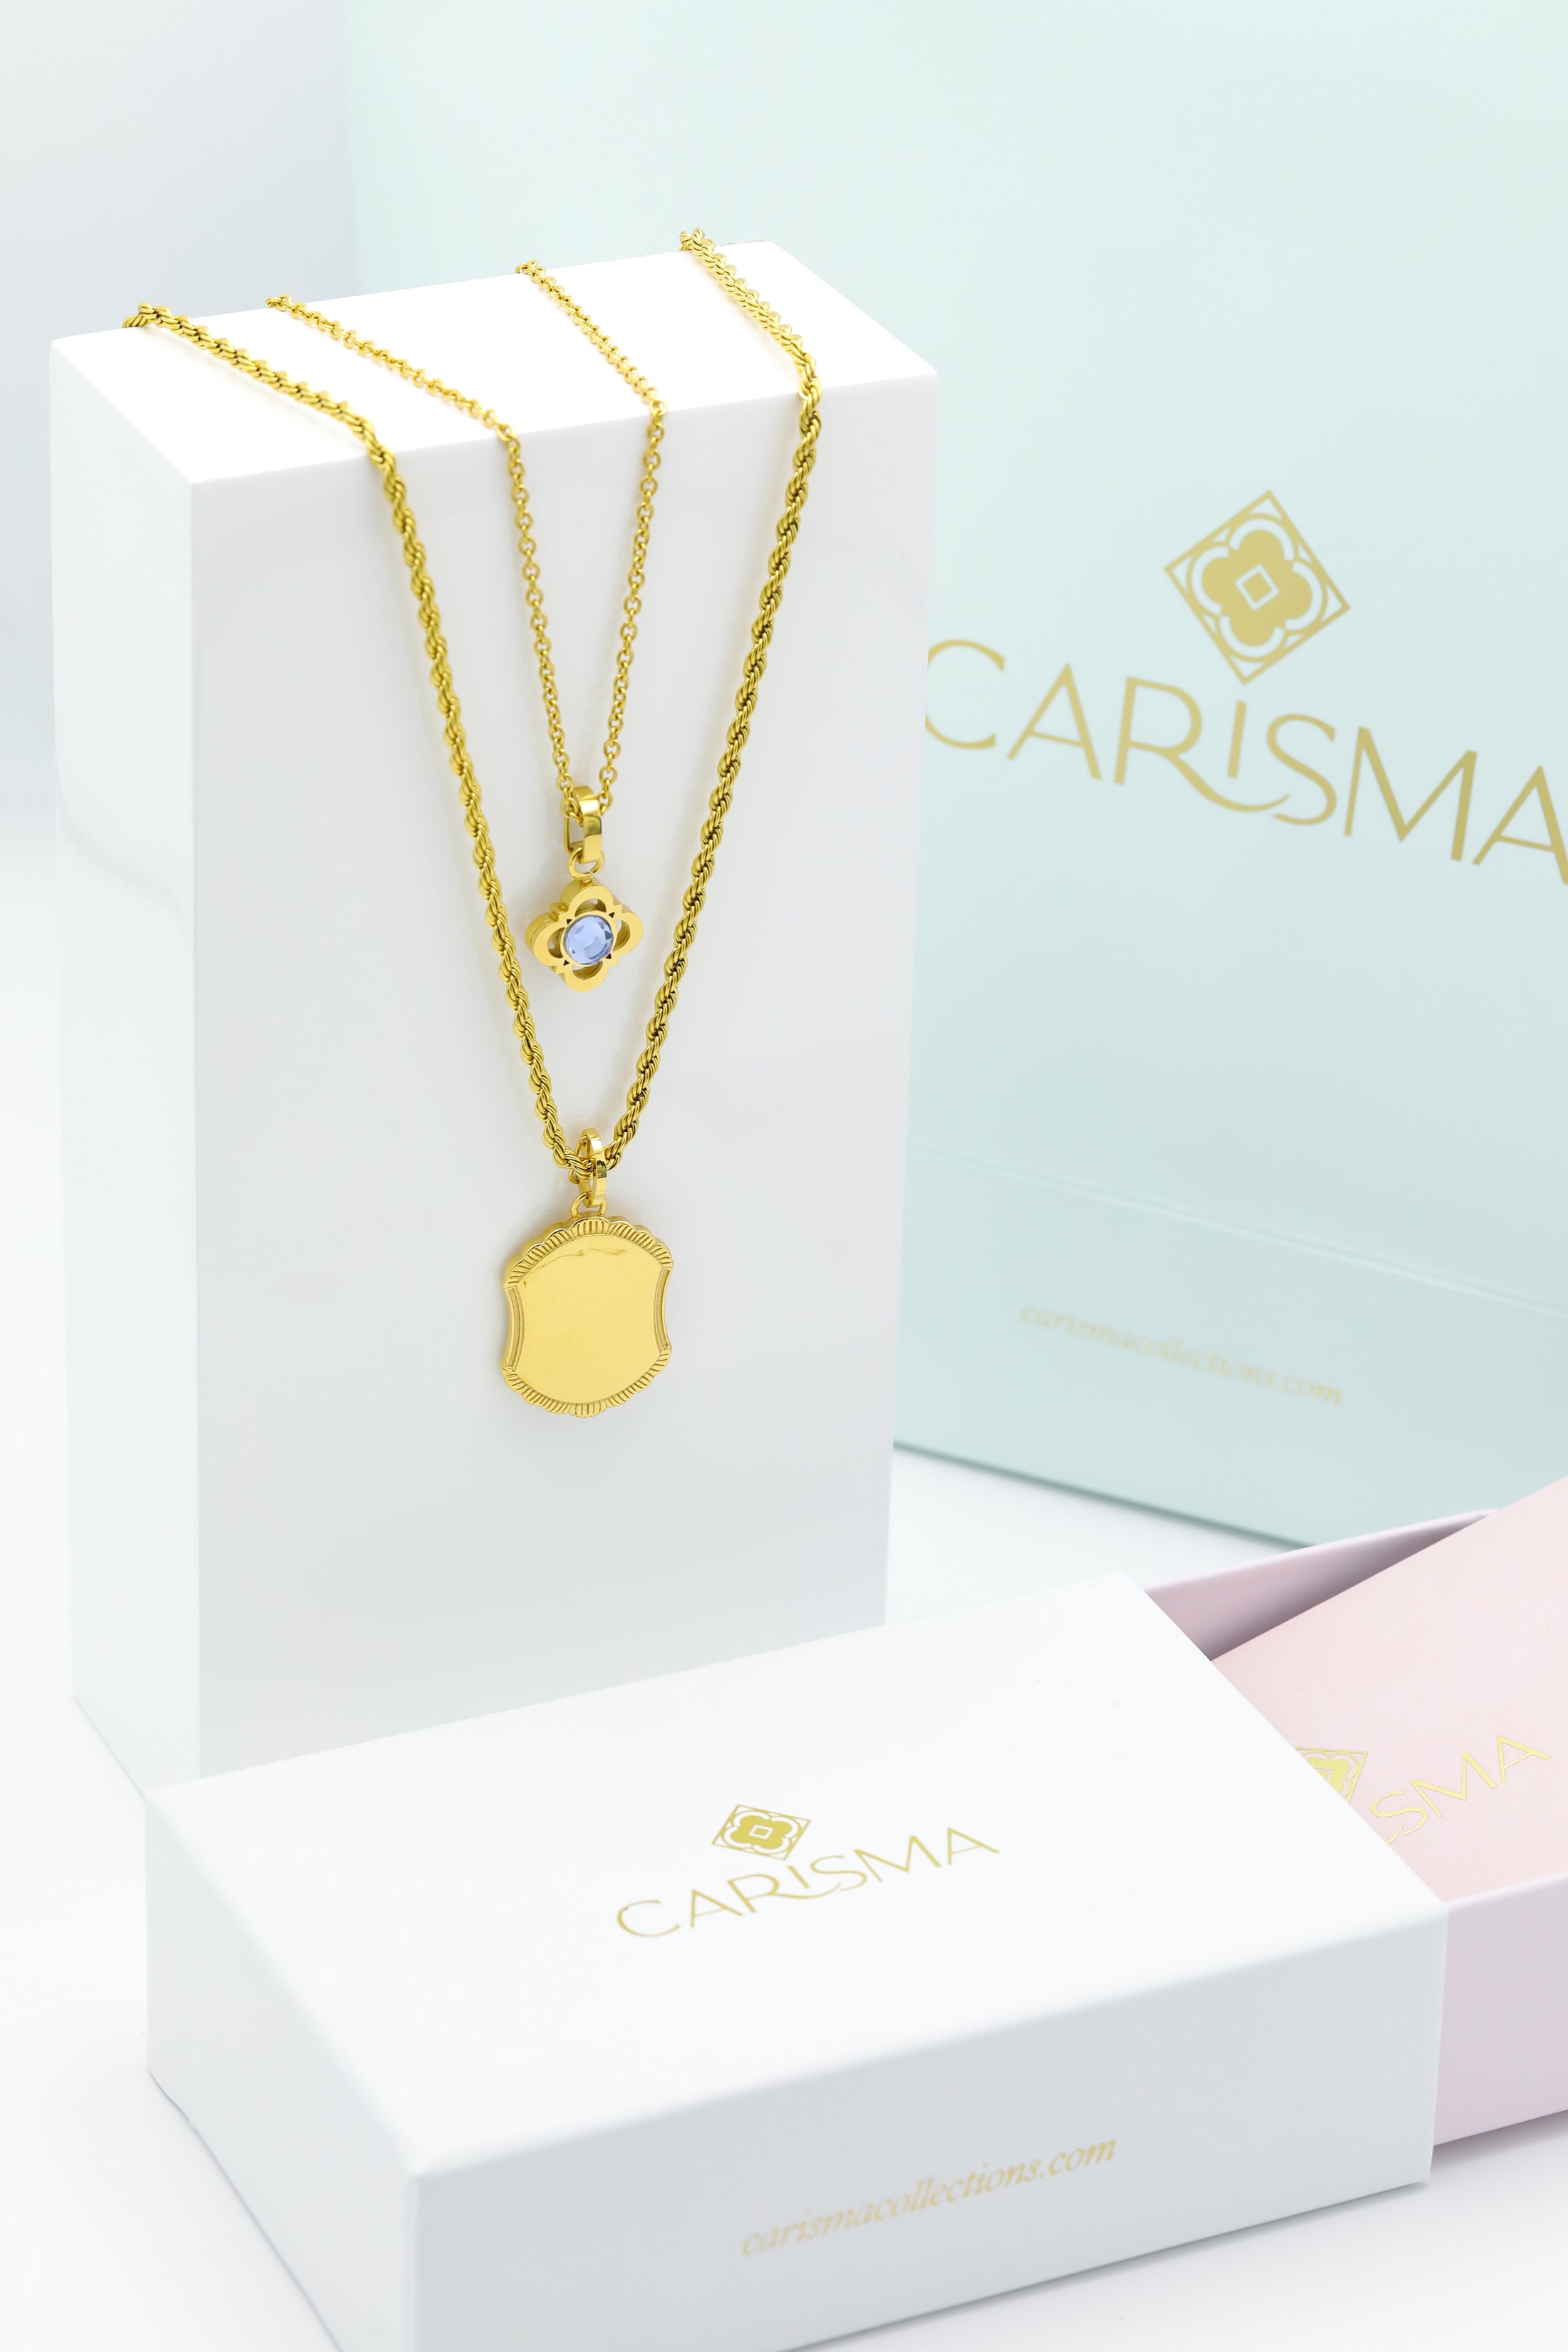 Gozo Lace Engravable Pendant &amp; Carisma Logo Birthstone Pendant Gift Set